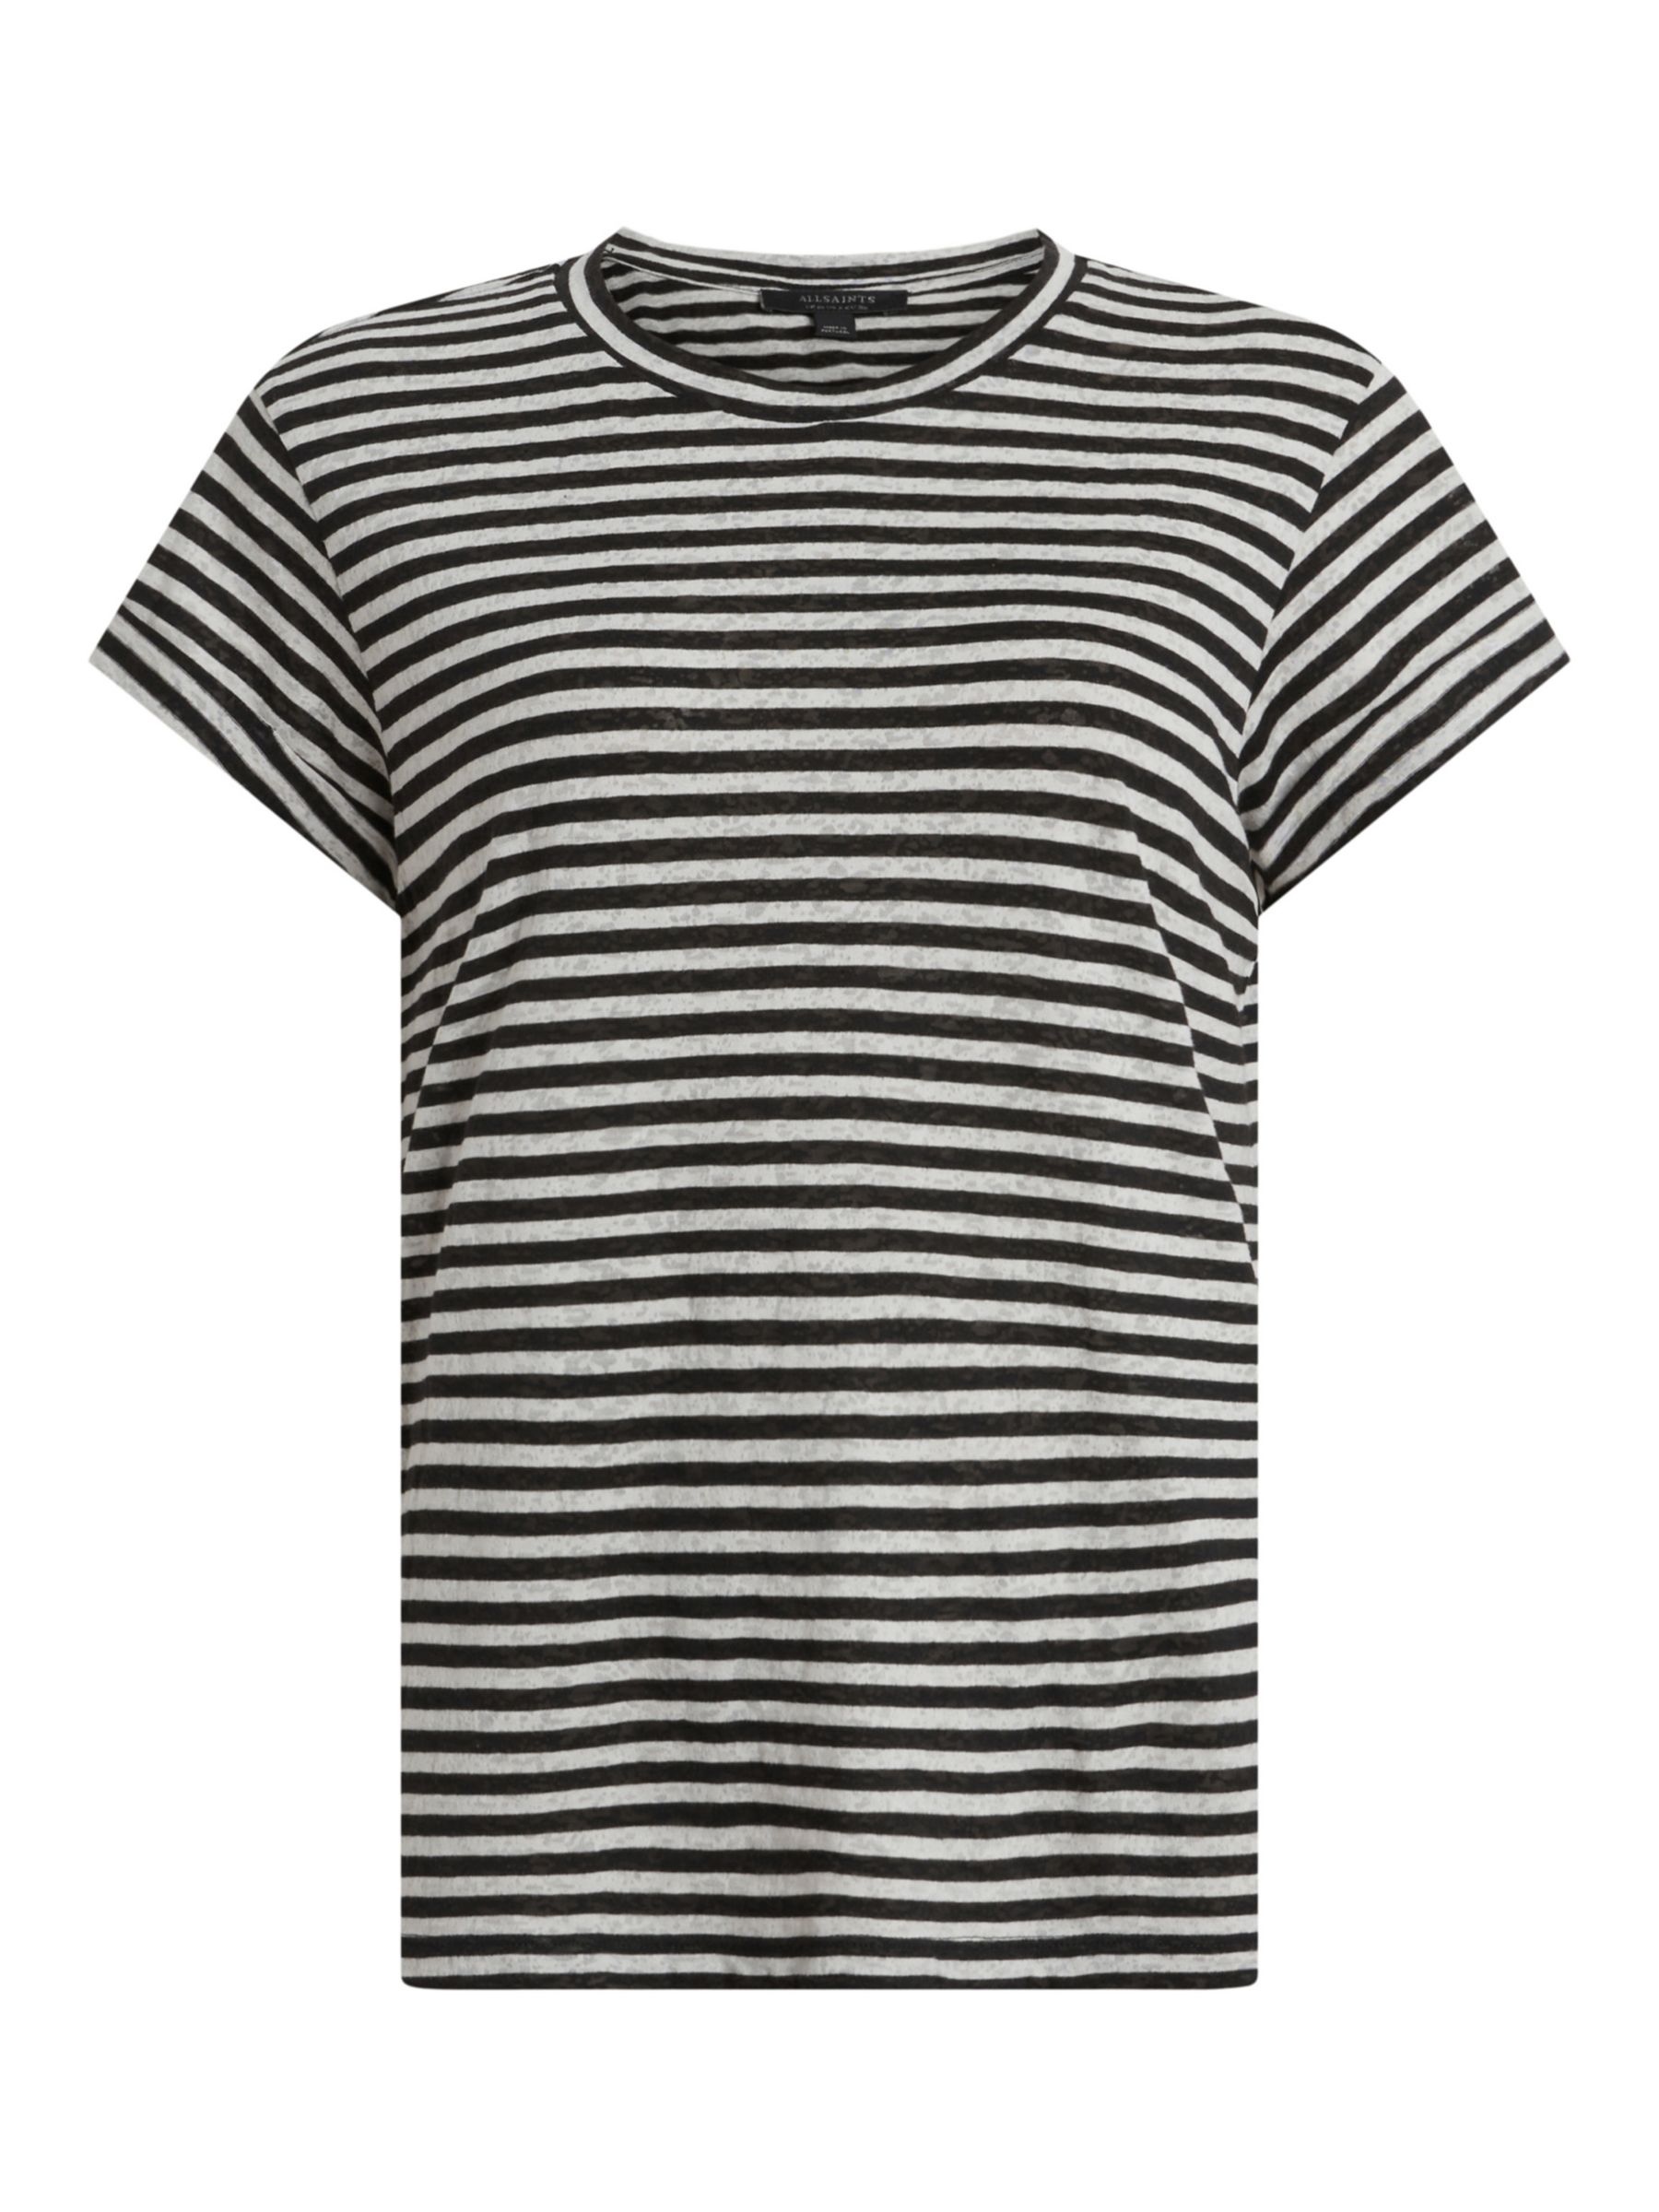 AllSaints Anna Stripe T-Shirt, Chalk/Ink at John Lewis & Partners